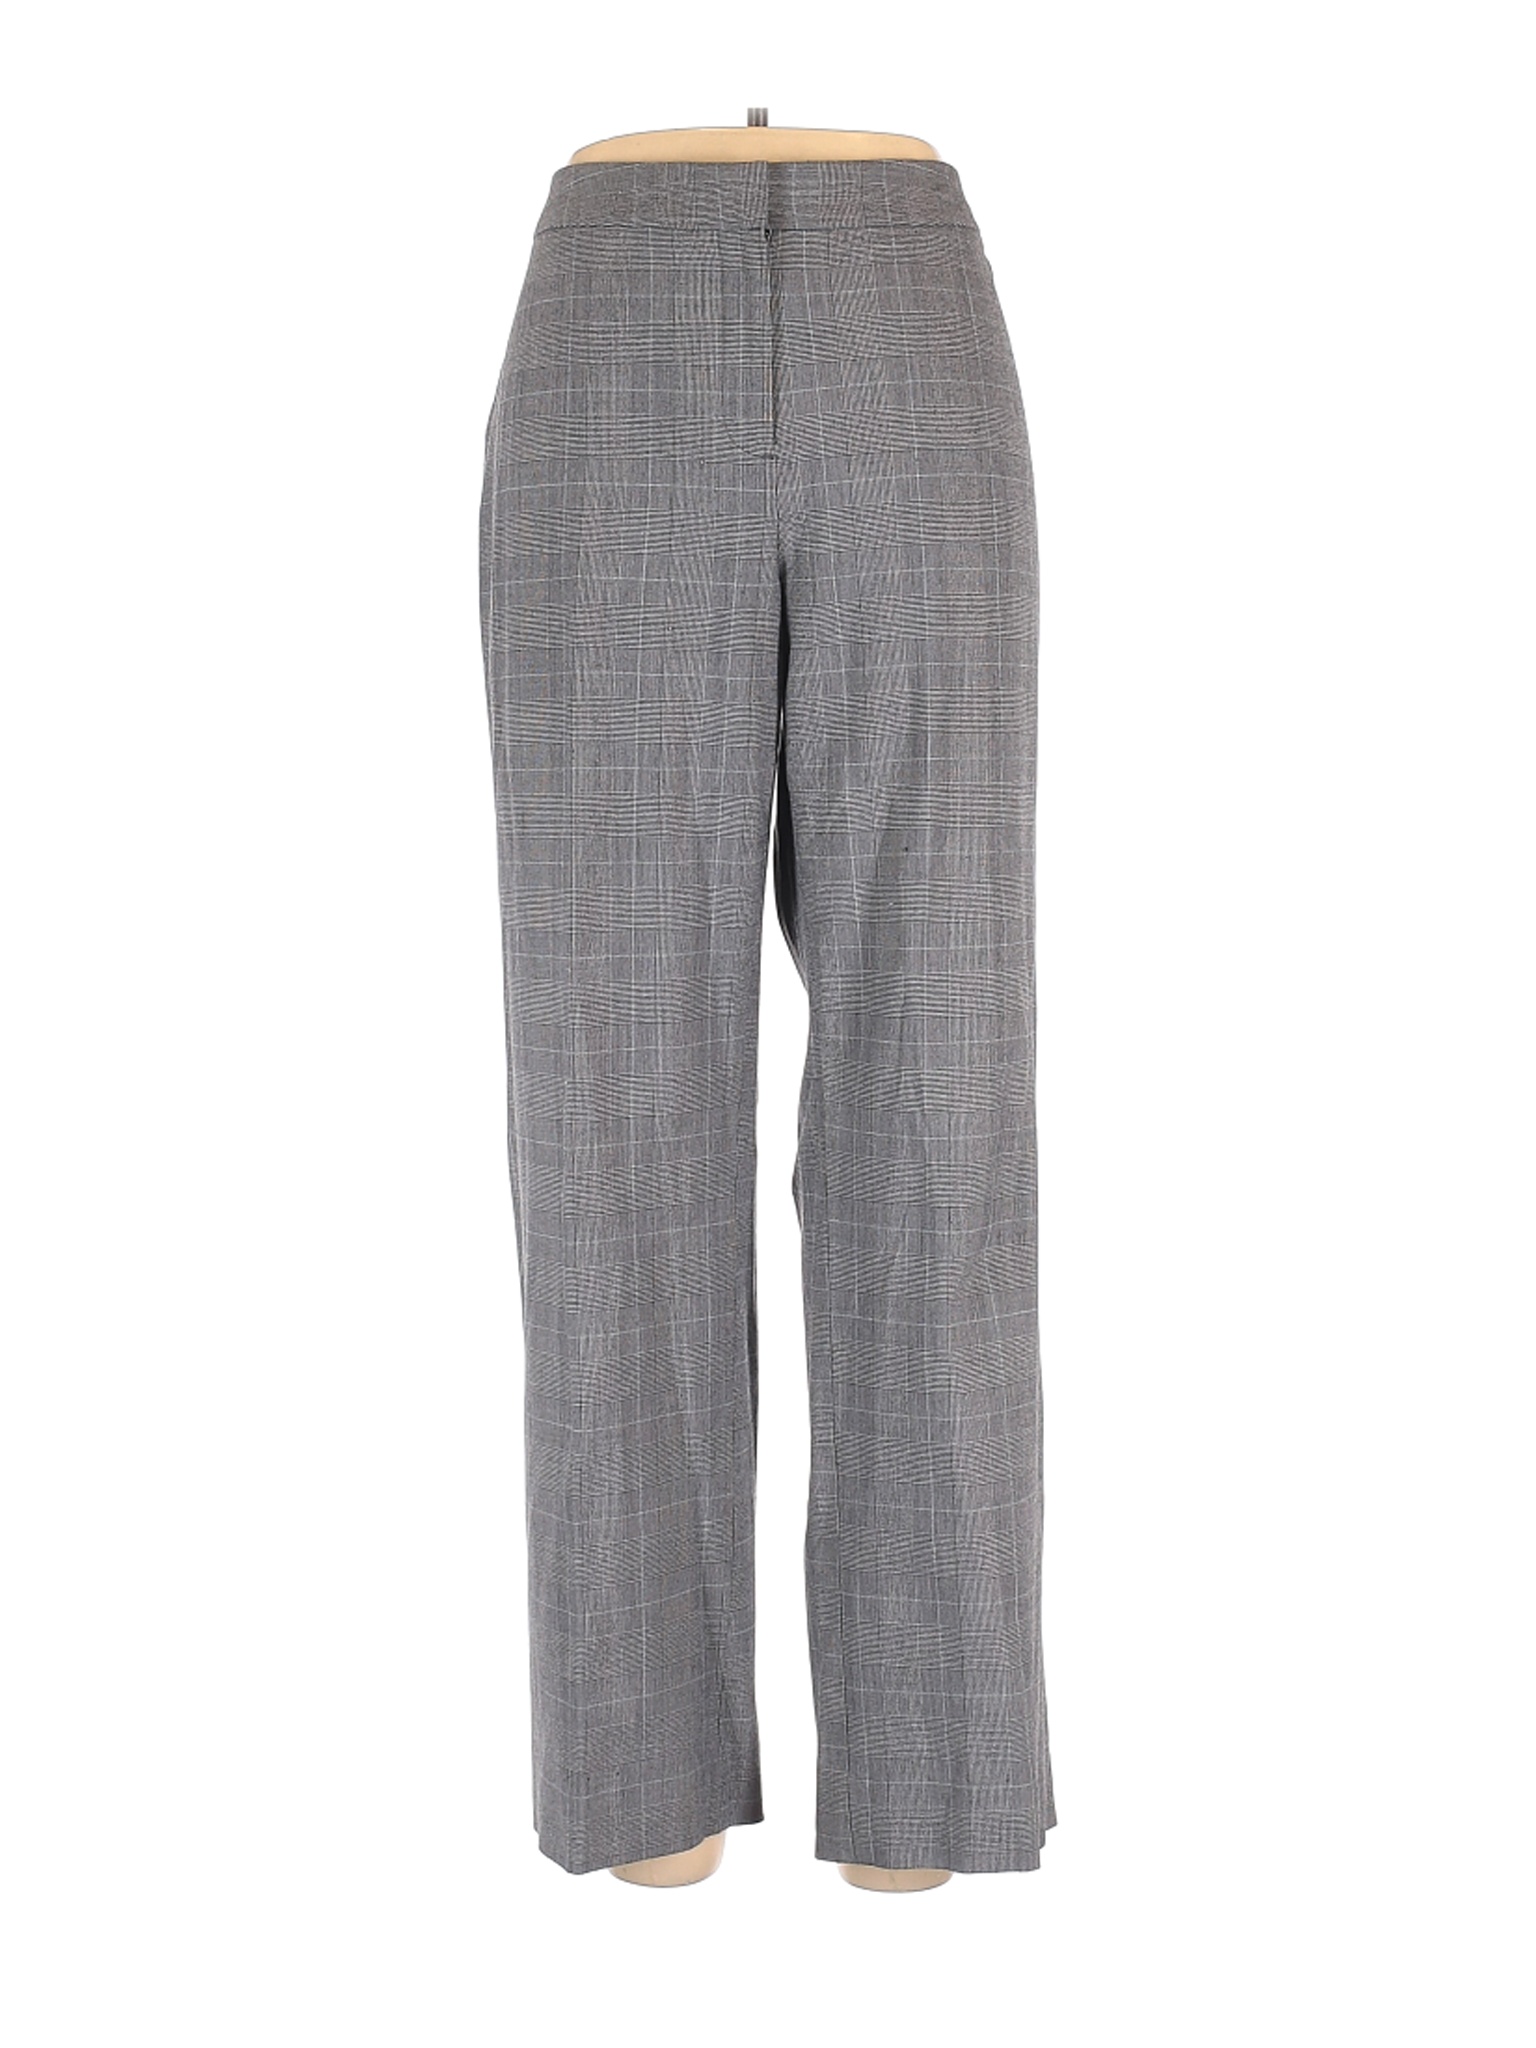 Style&Co Women Gray Dress Pants 12 | eBay